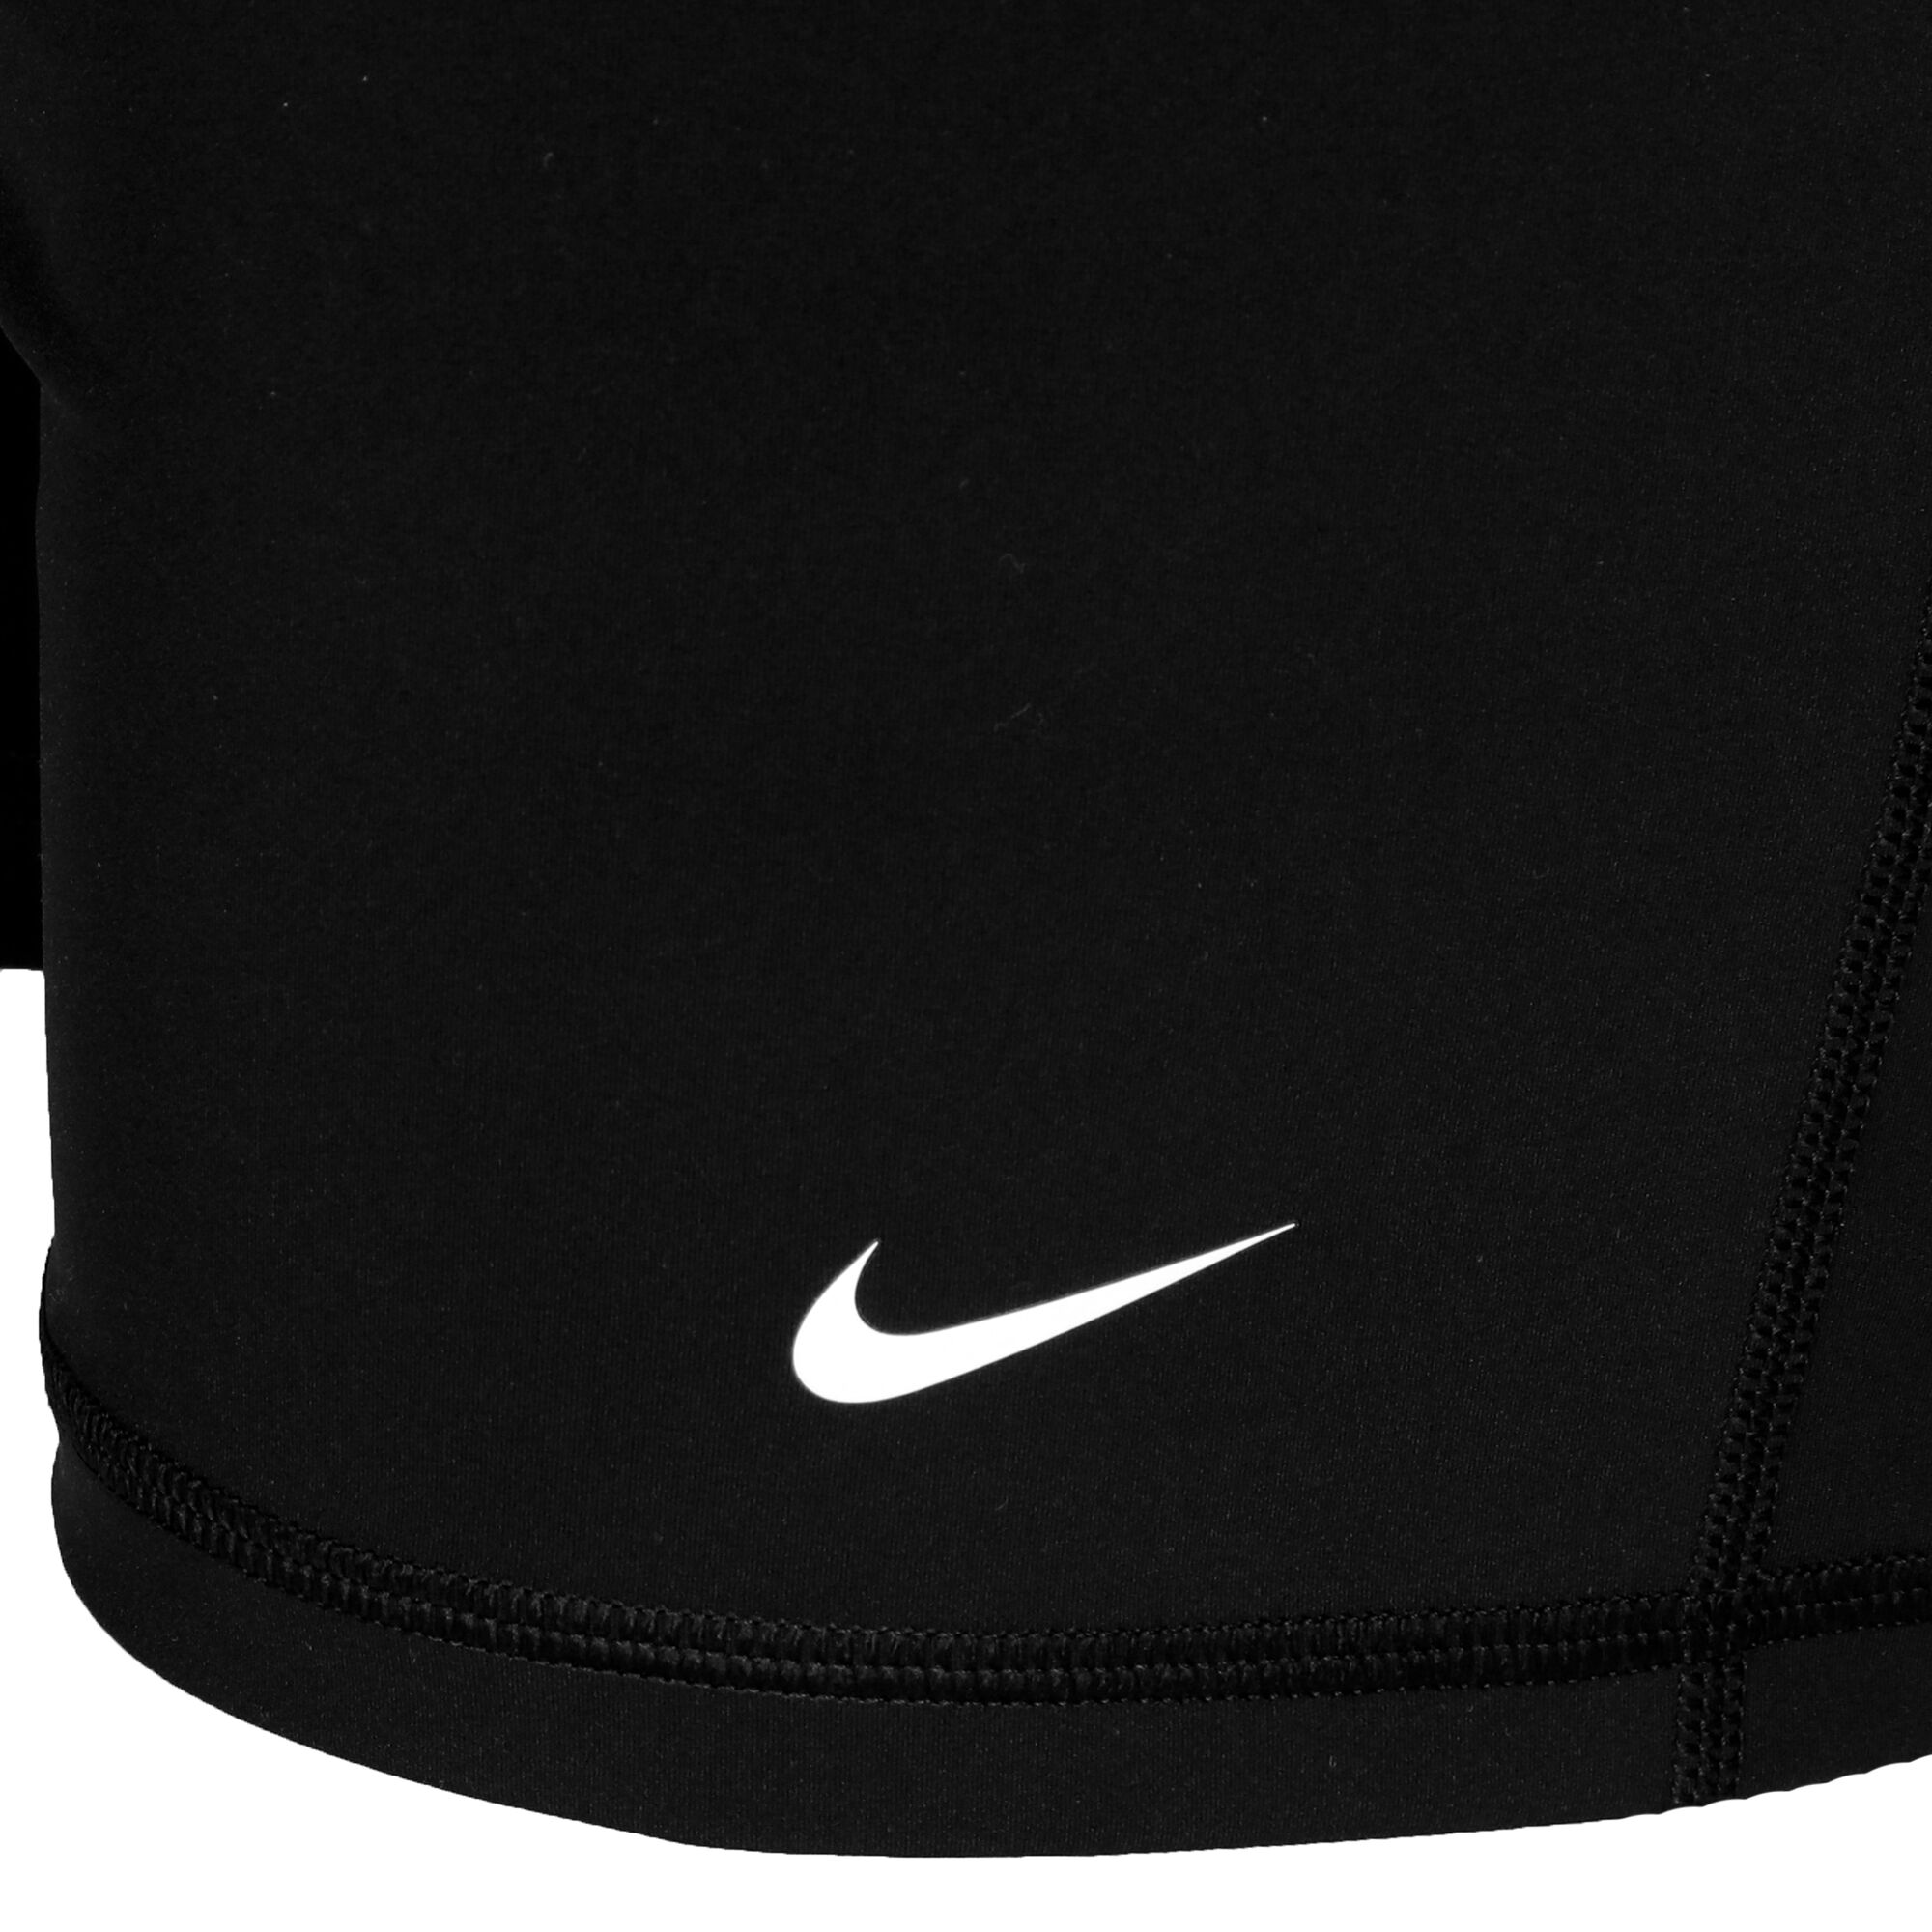 Buy Nike Pro 365 3 Inch Shorts from Next Poland